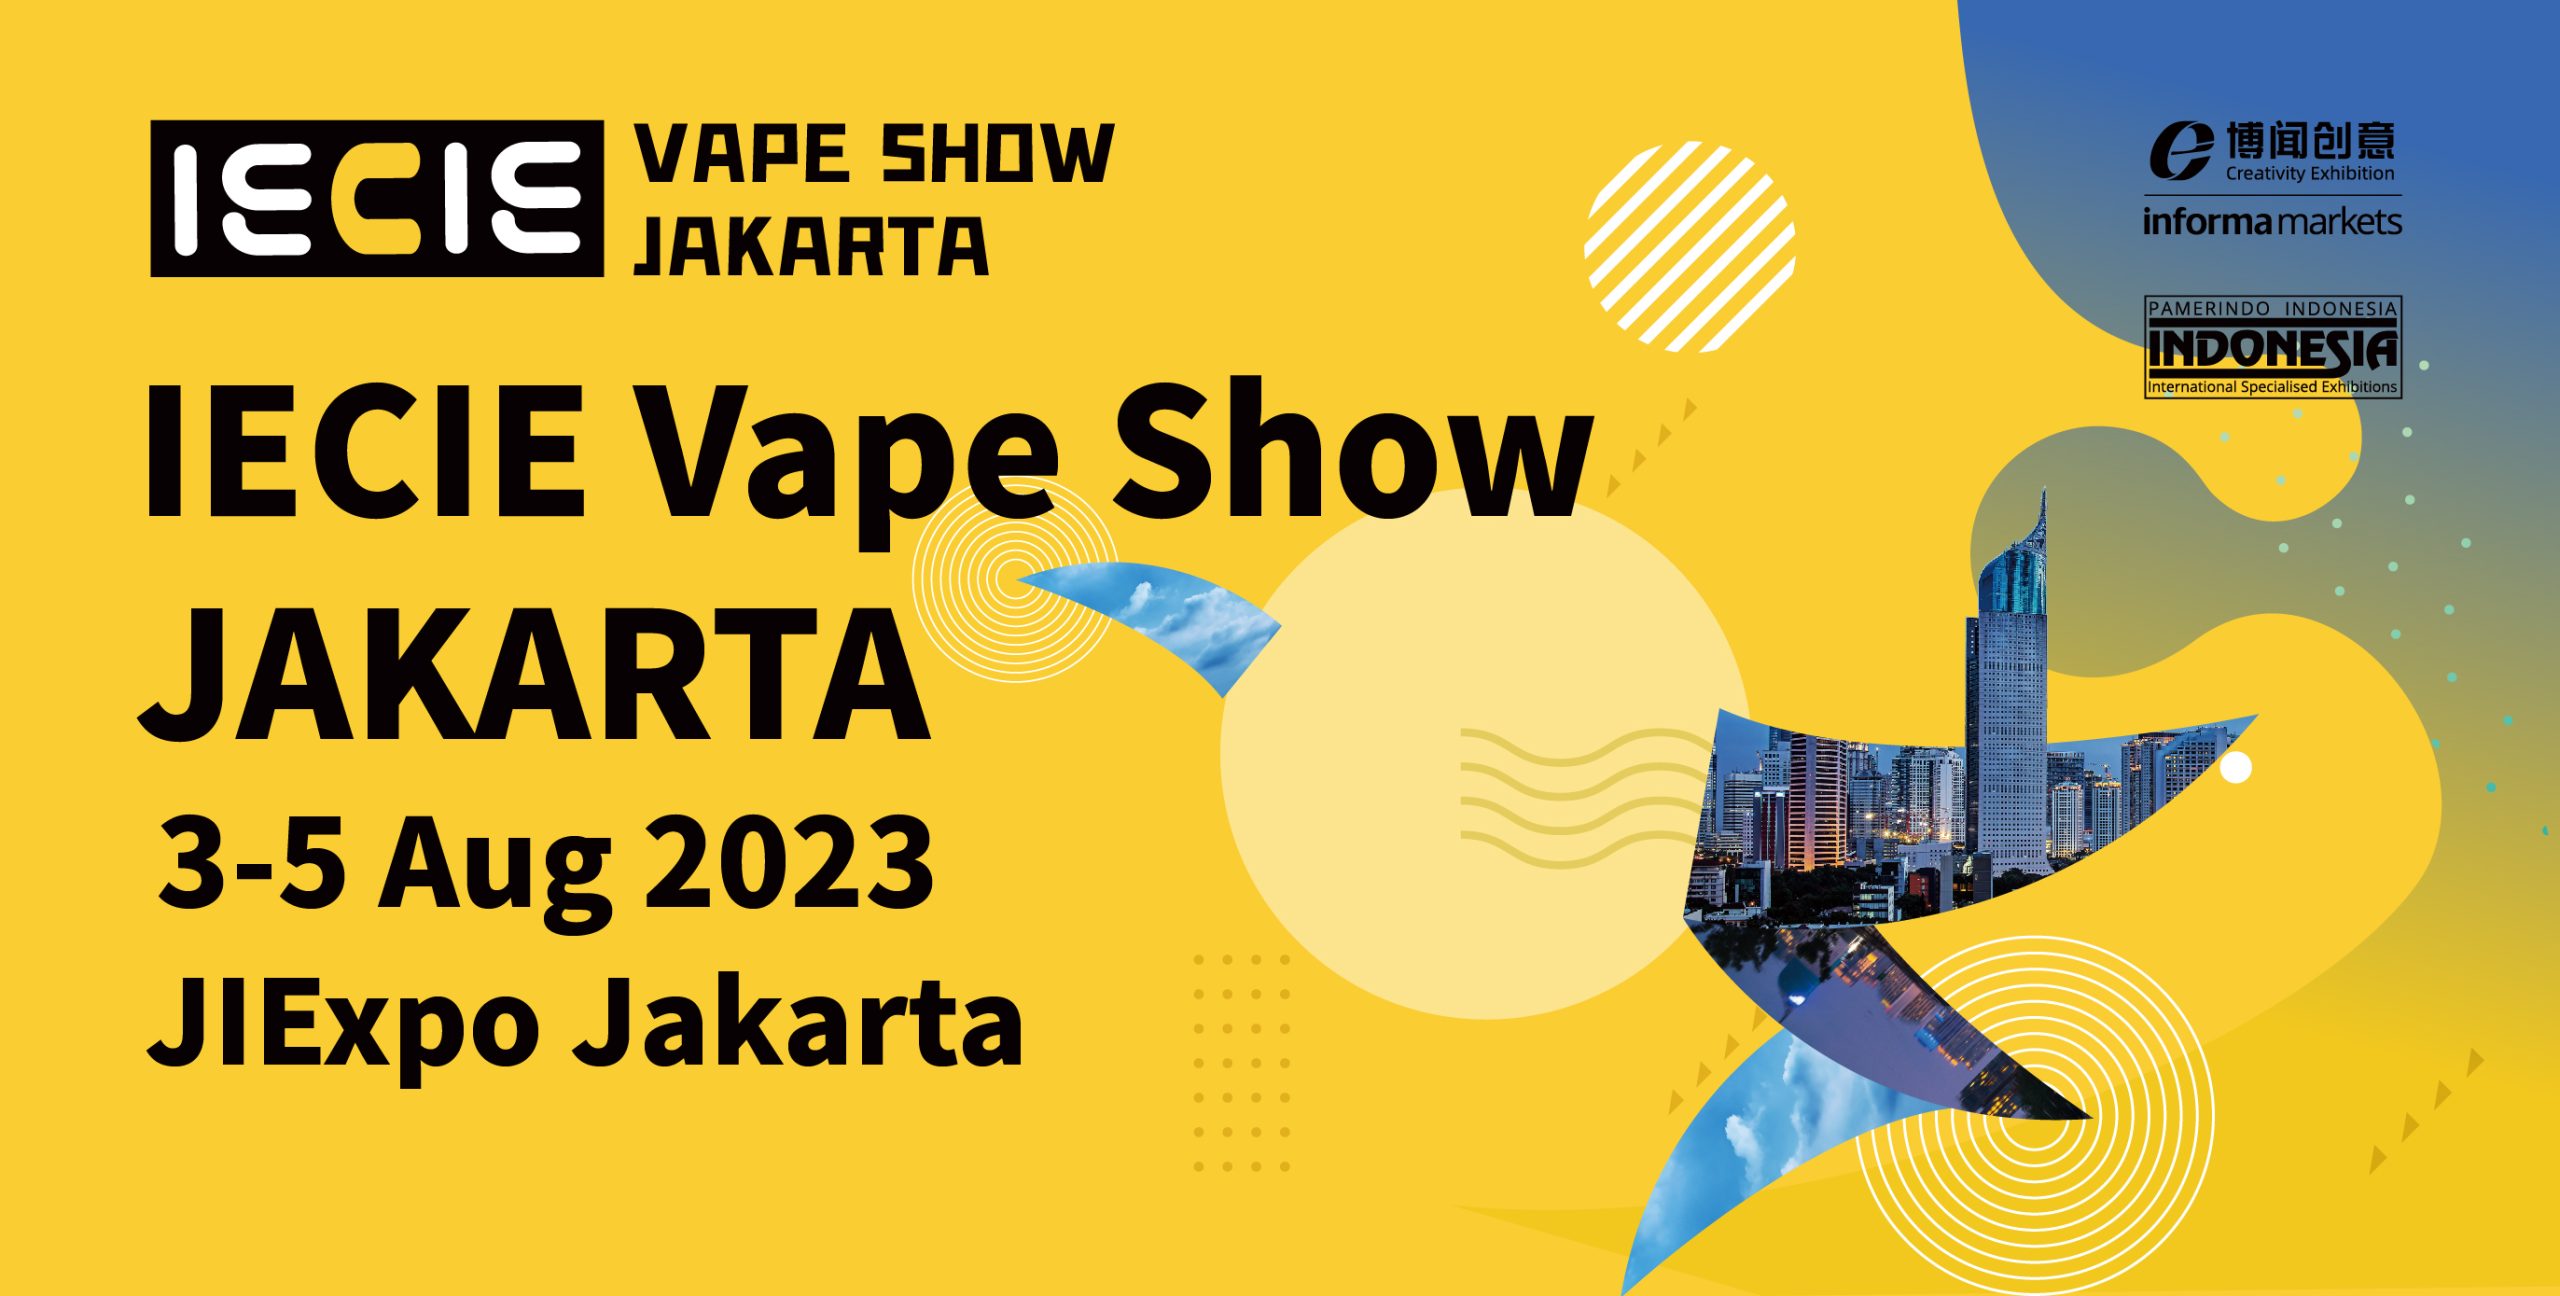 IECIE VAPE SHOW JAKARTA 2023 - EXPOSITION INTERNATIONALE DE JAKARTA